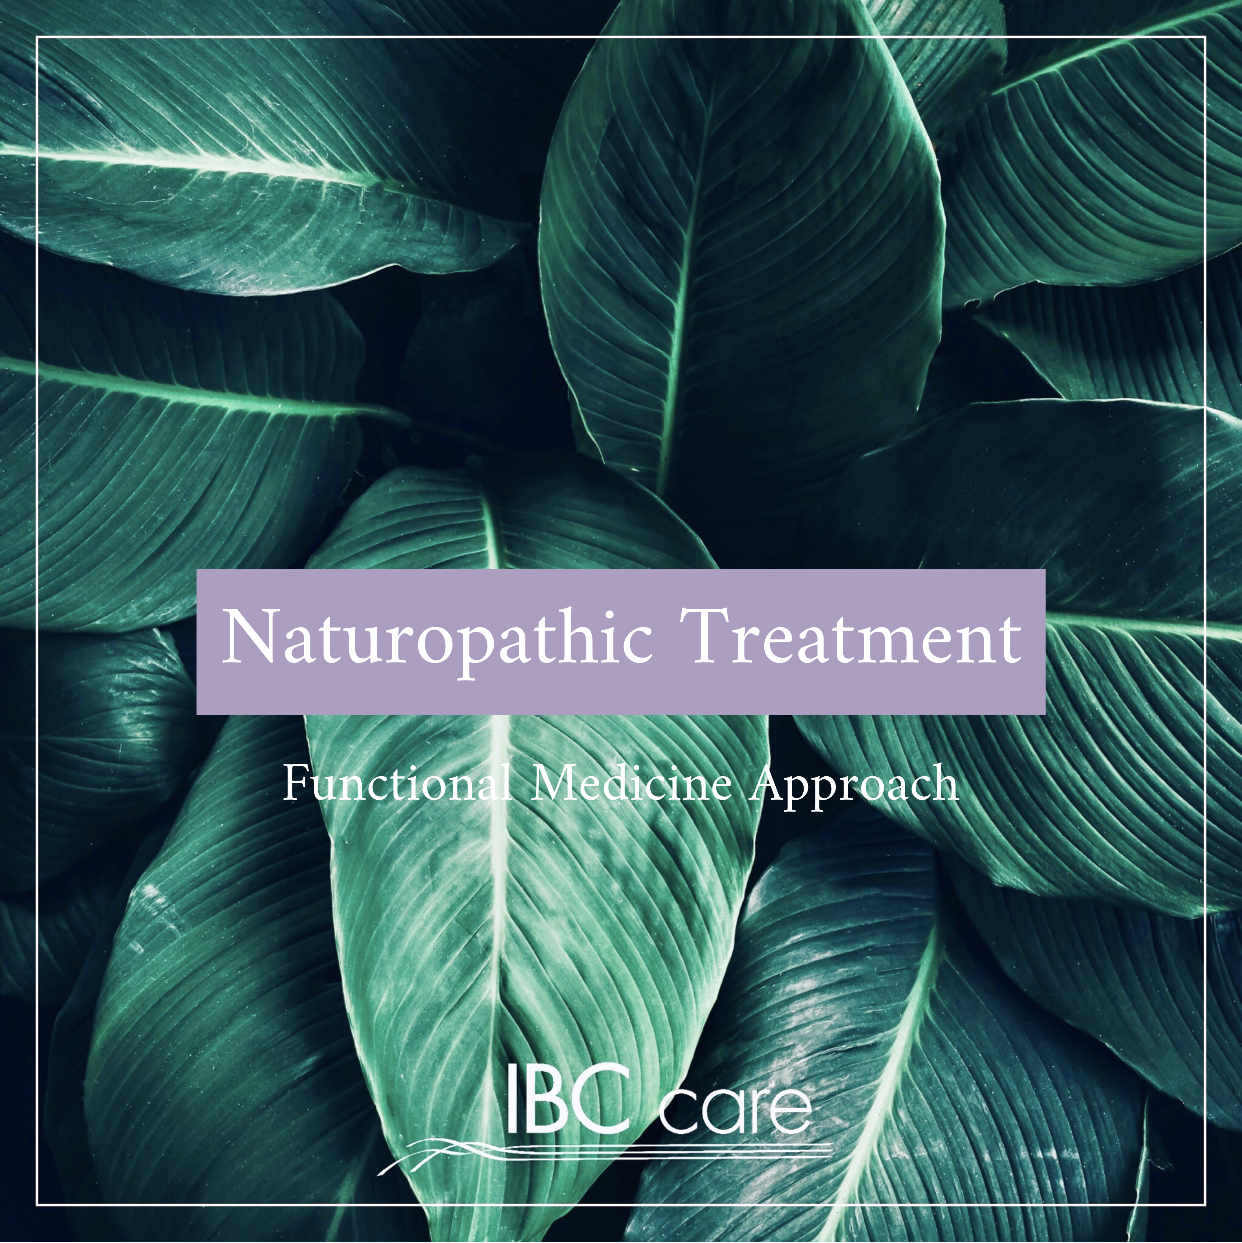 Naturopathic treatment